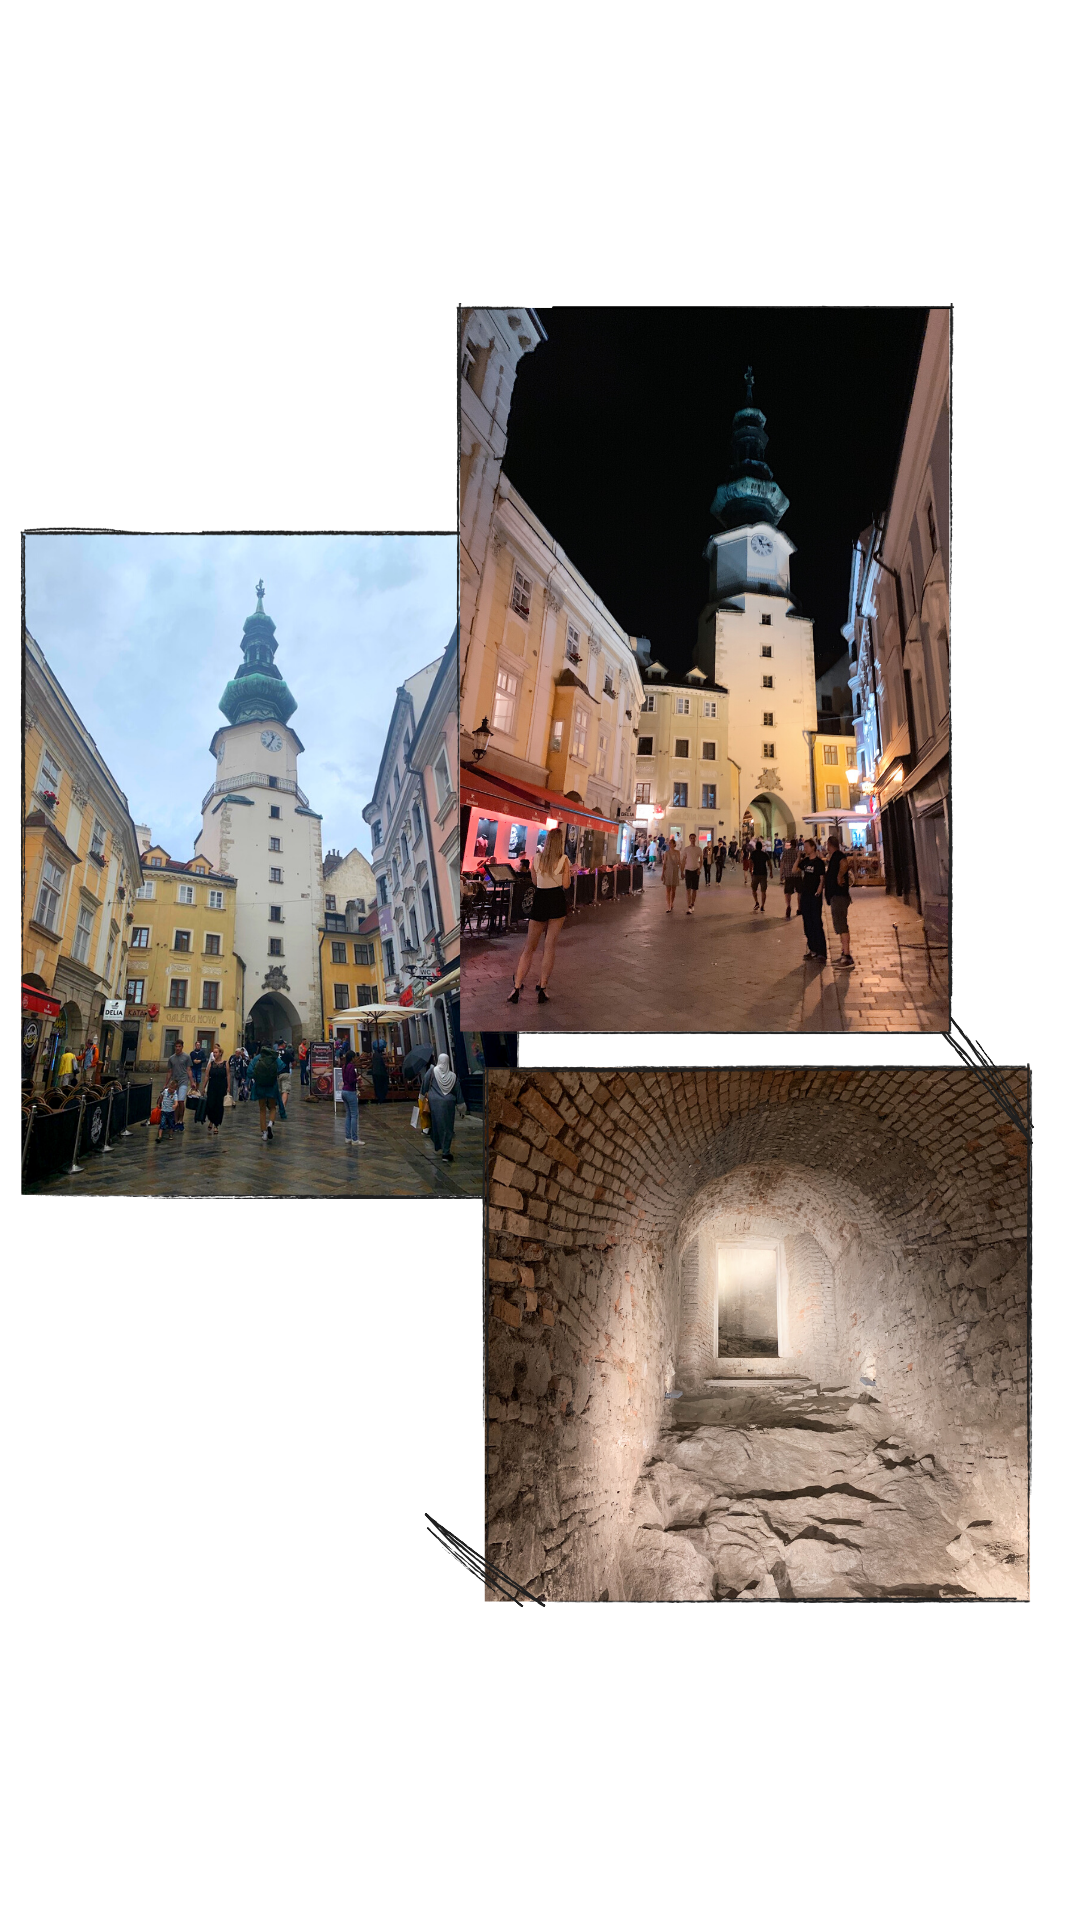 Photos from Michael’s Gate. Bottom right image is an underground corridor beneath the Bratislava Castle.